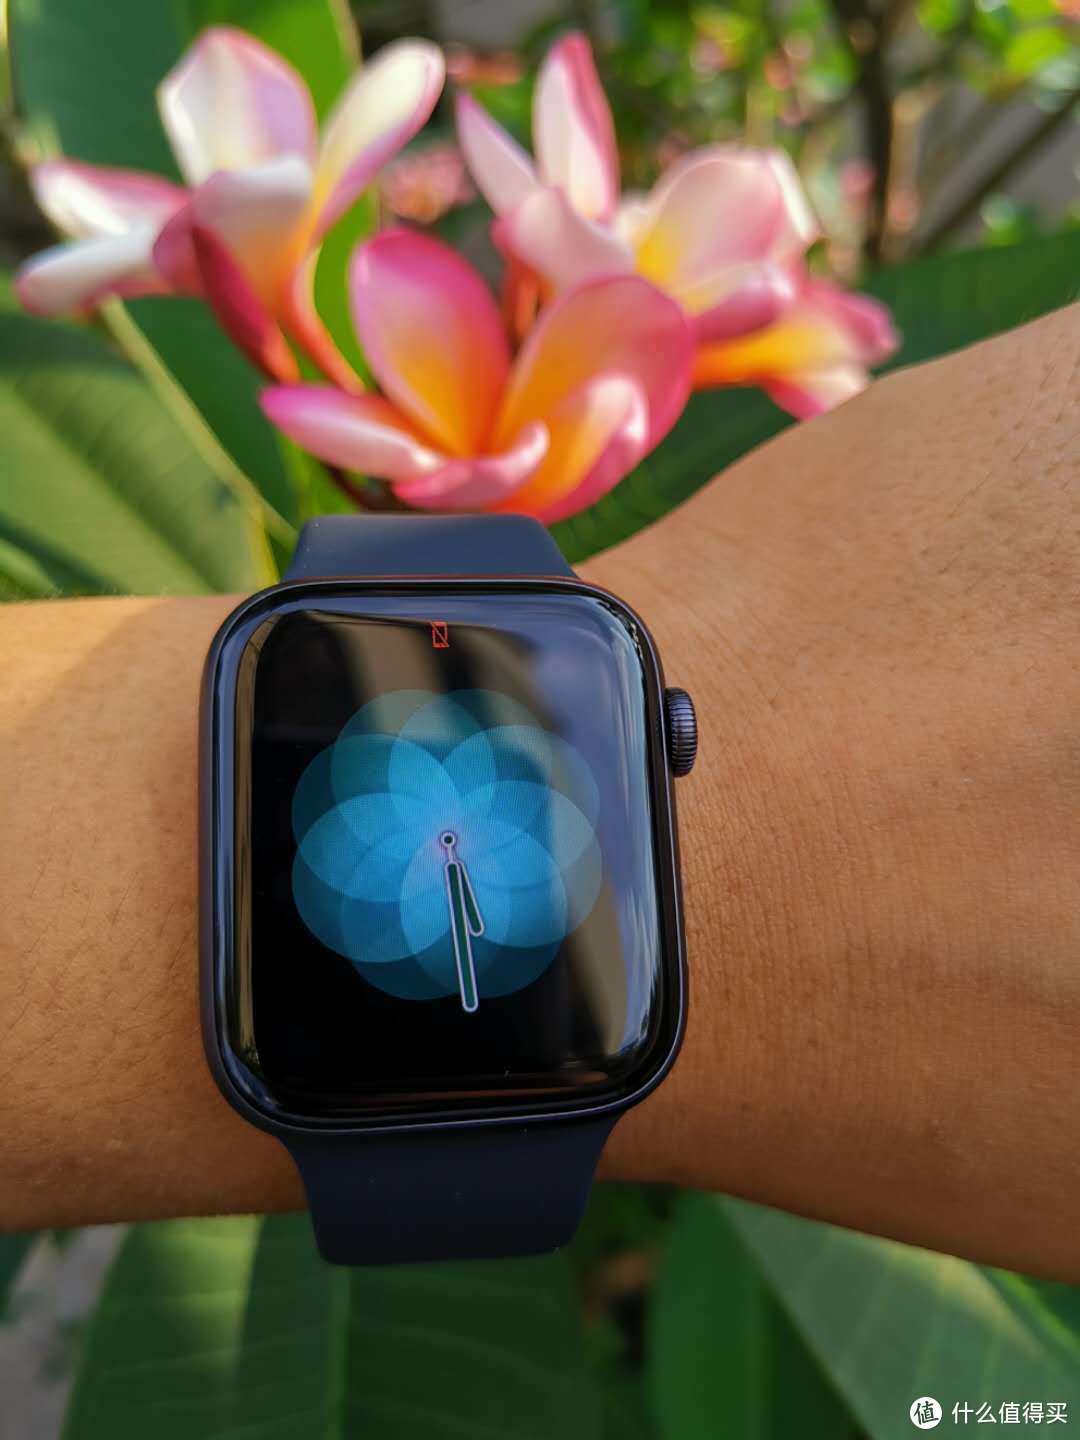 APPLE Watch Series 4被认为是苹果手表系列产品中定位较为清晰、产品功能也比较完整的产品